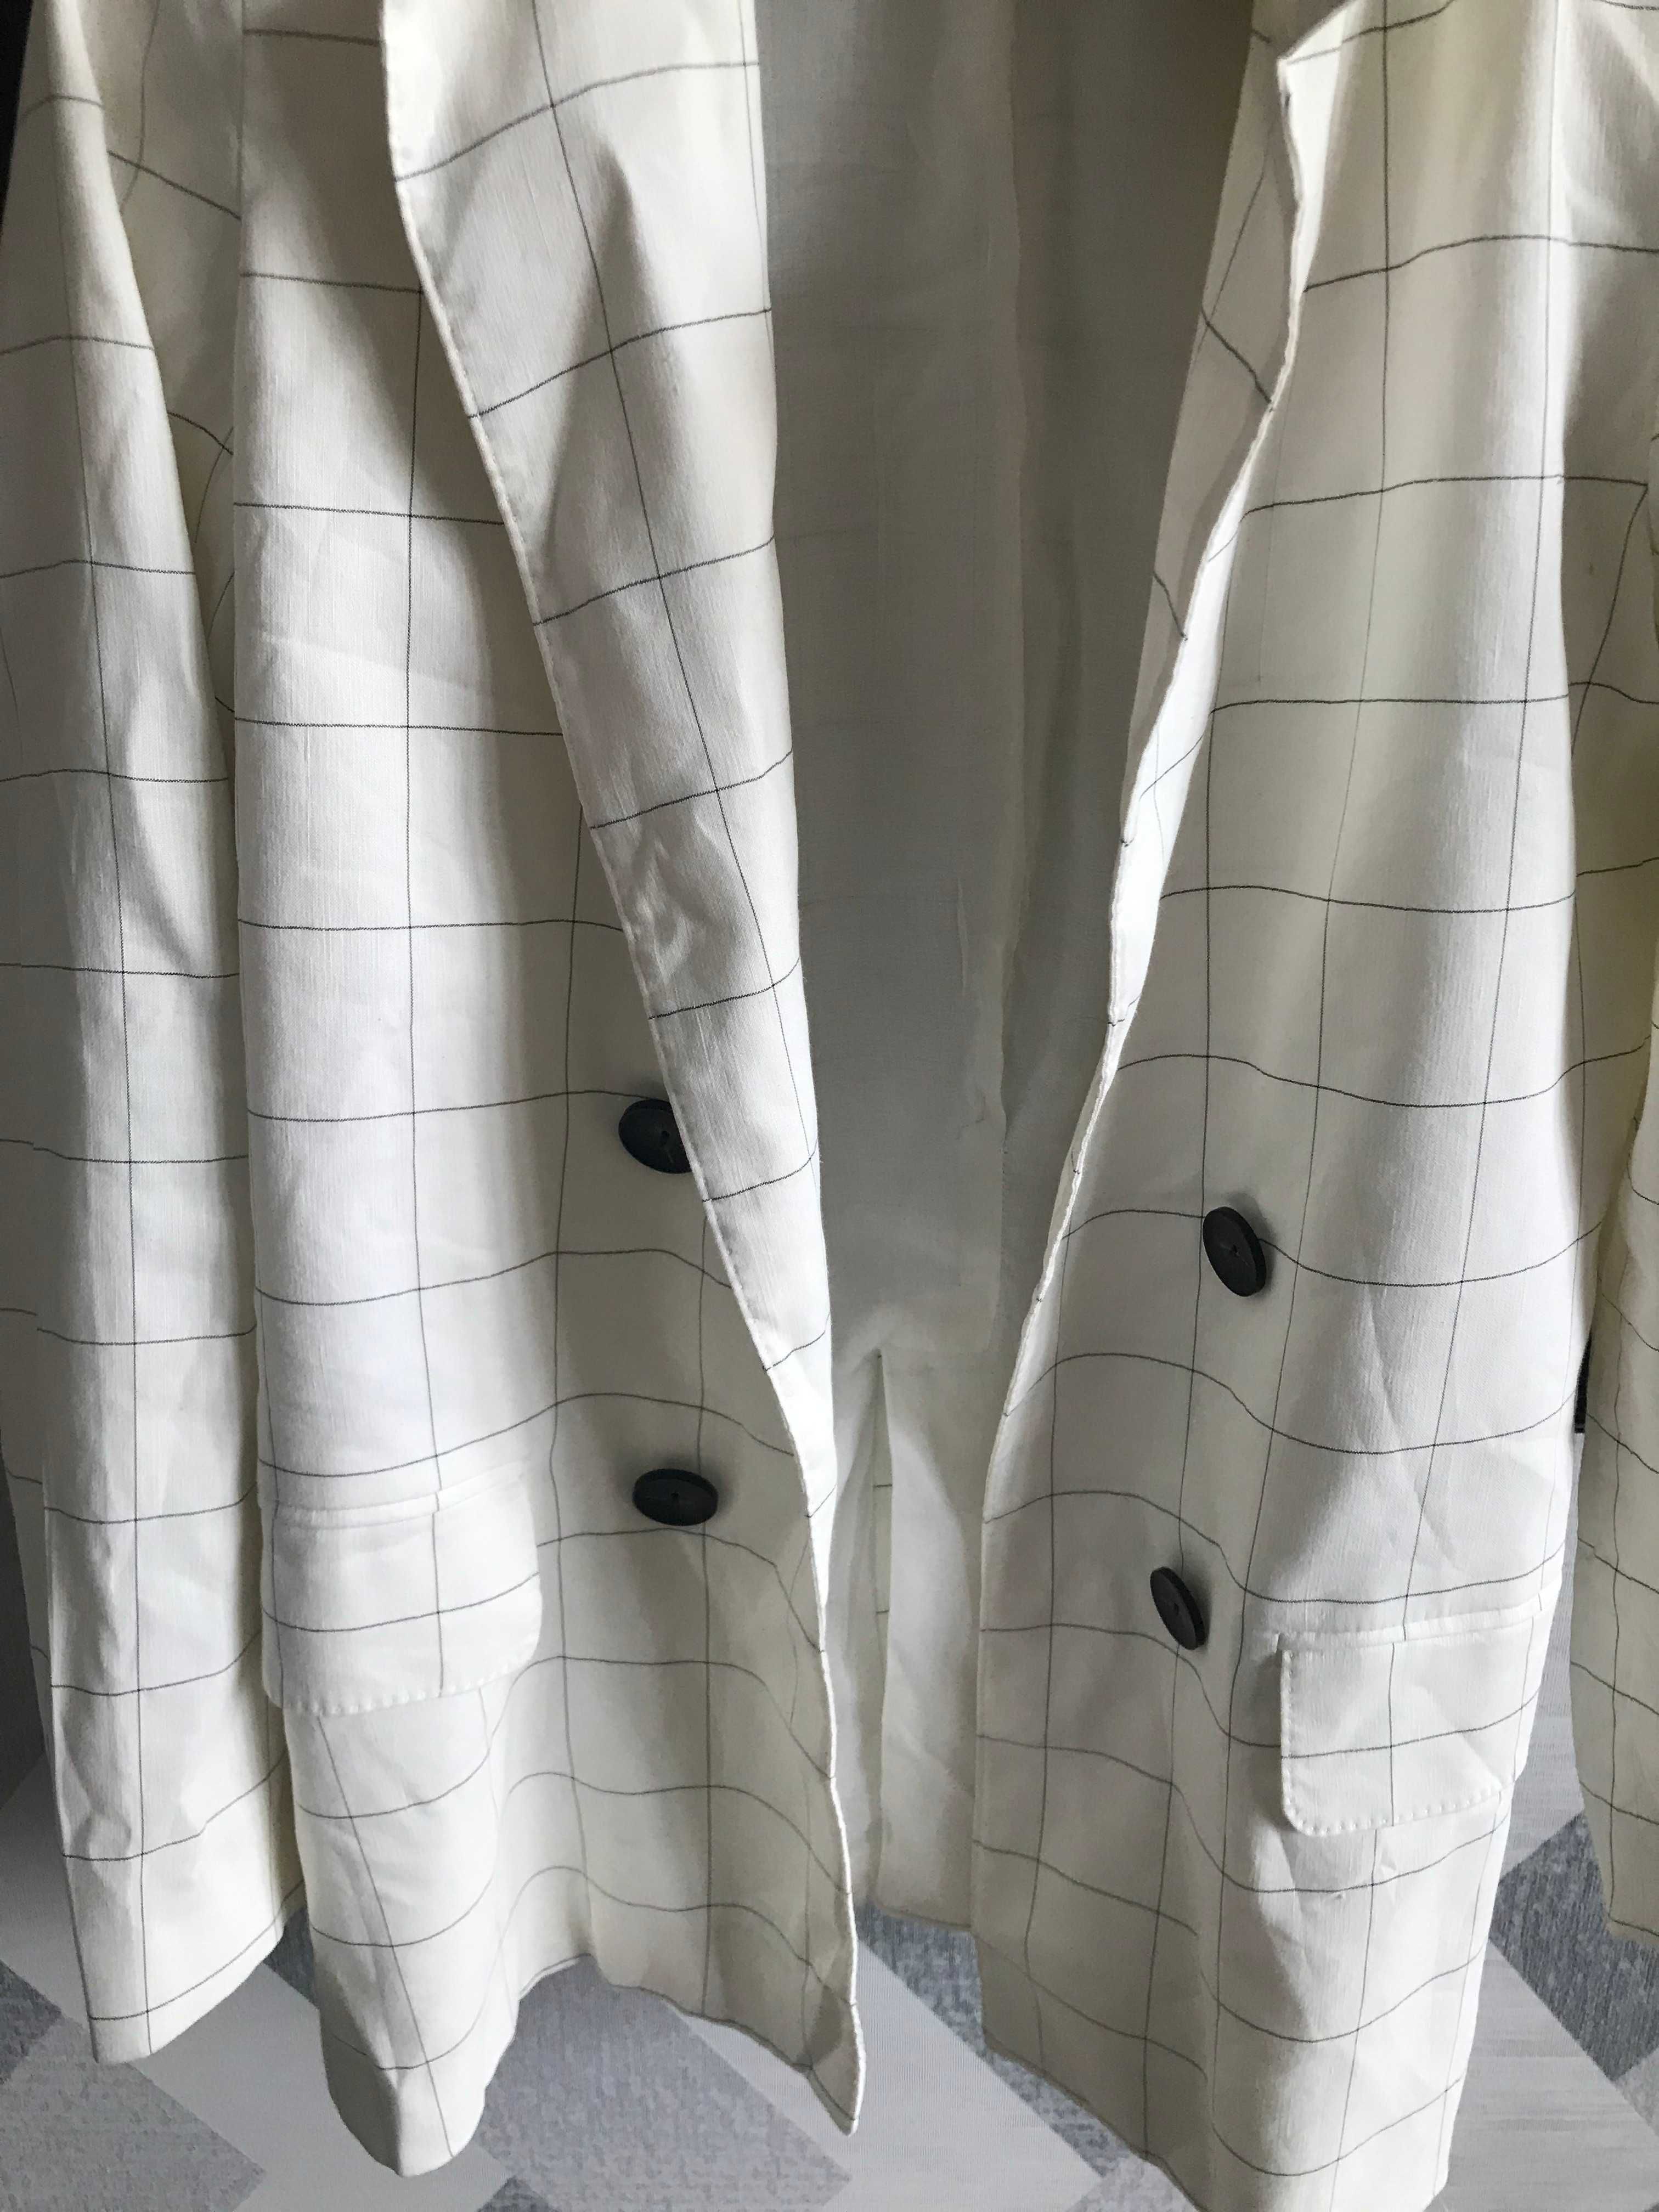 Женский пиджак Massimo Dutti размер 34 белый в клетку вискоза